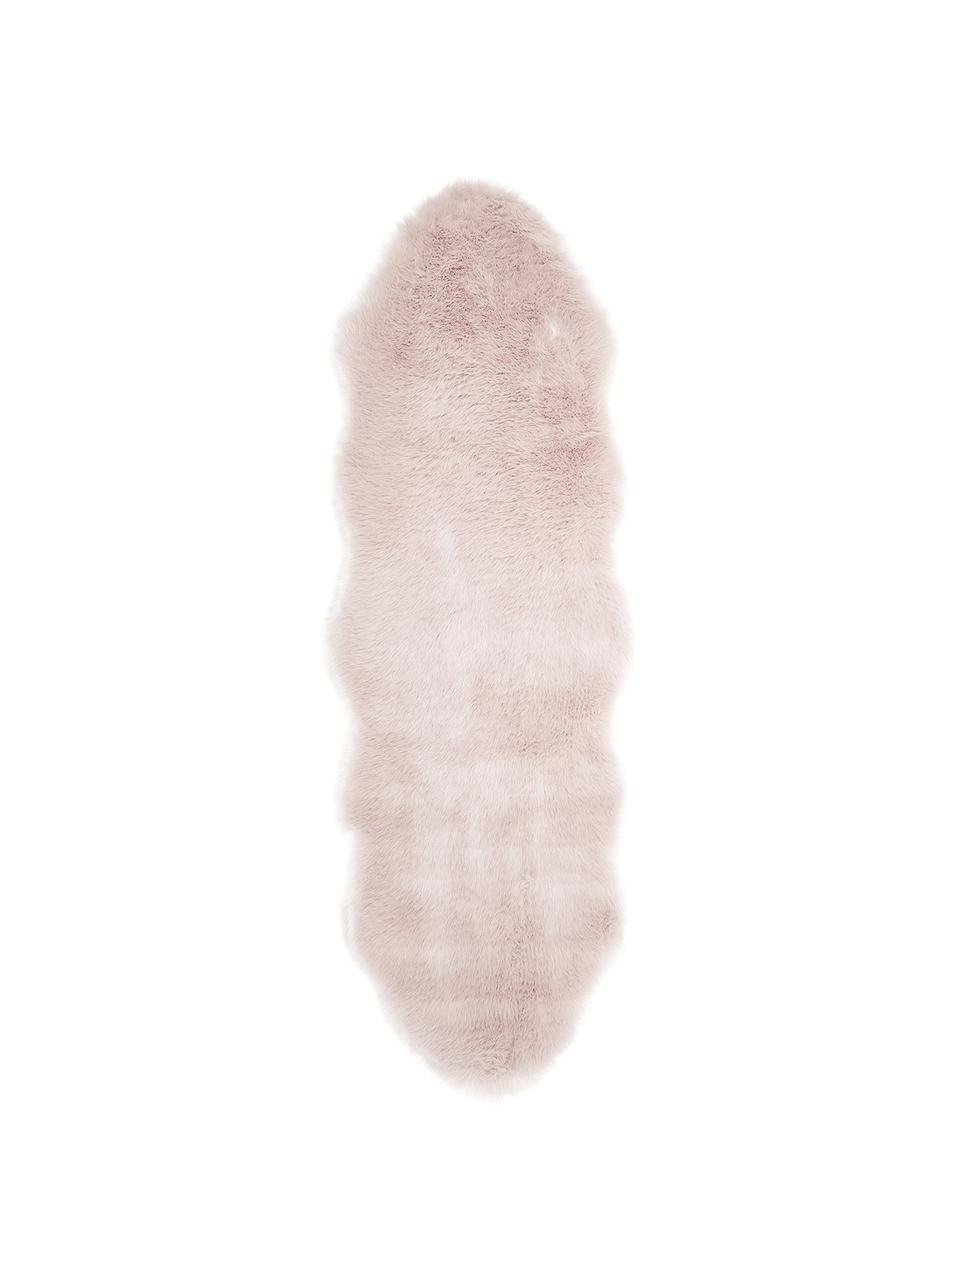 Tapis en fourrure synthétique Mathilde, lisse, Rose, larg. 60 x long. 180 cm